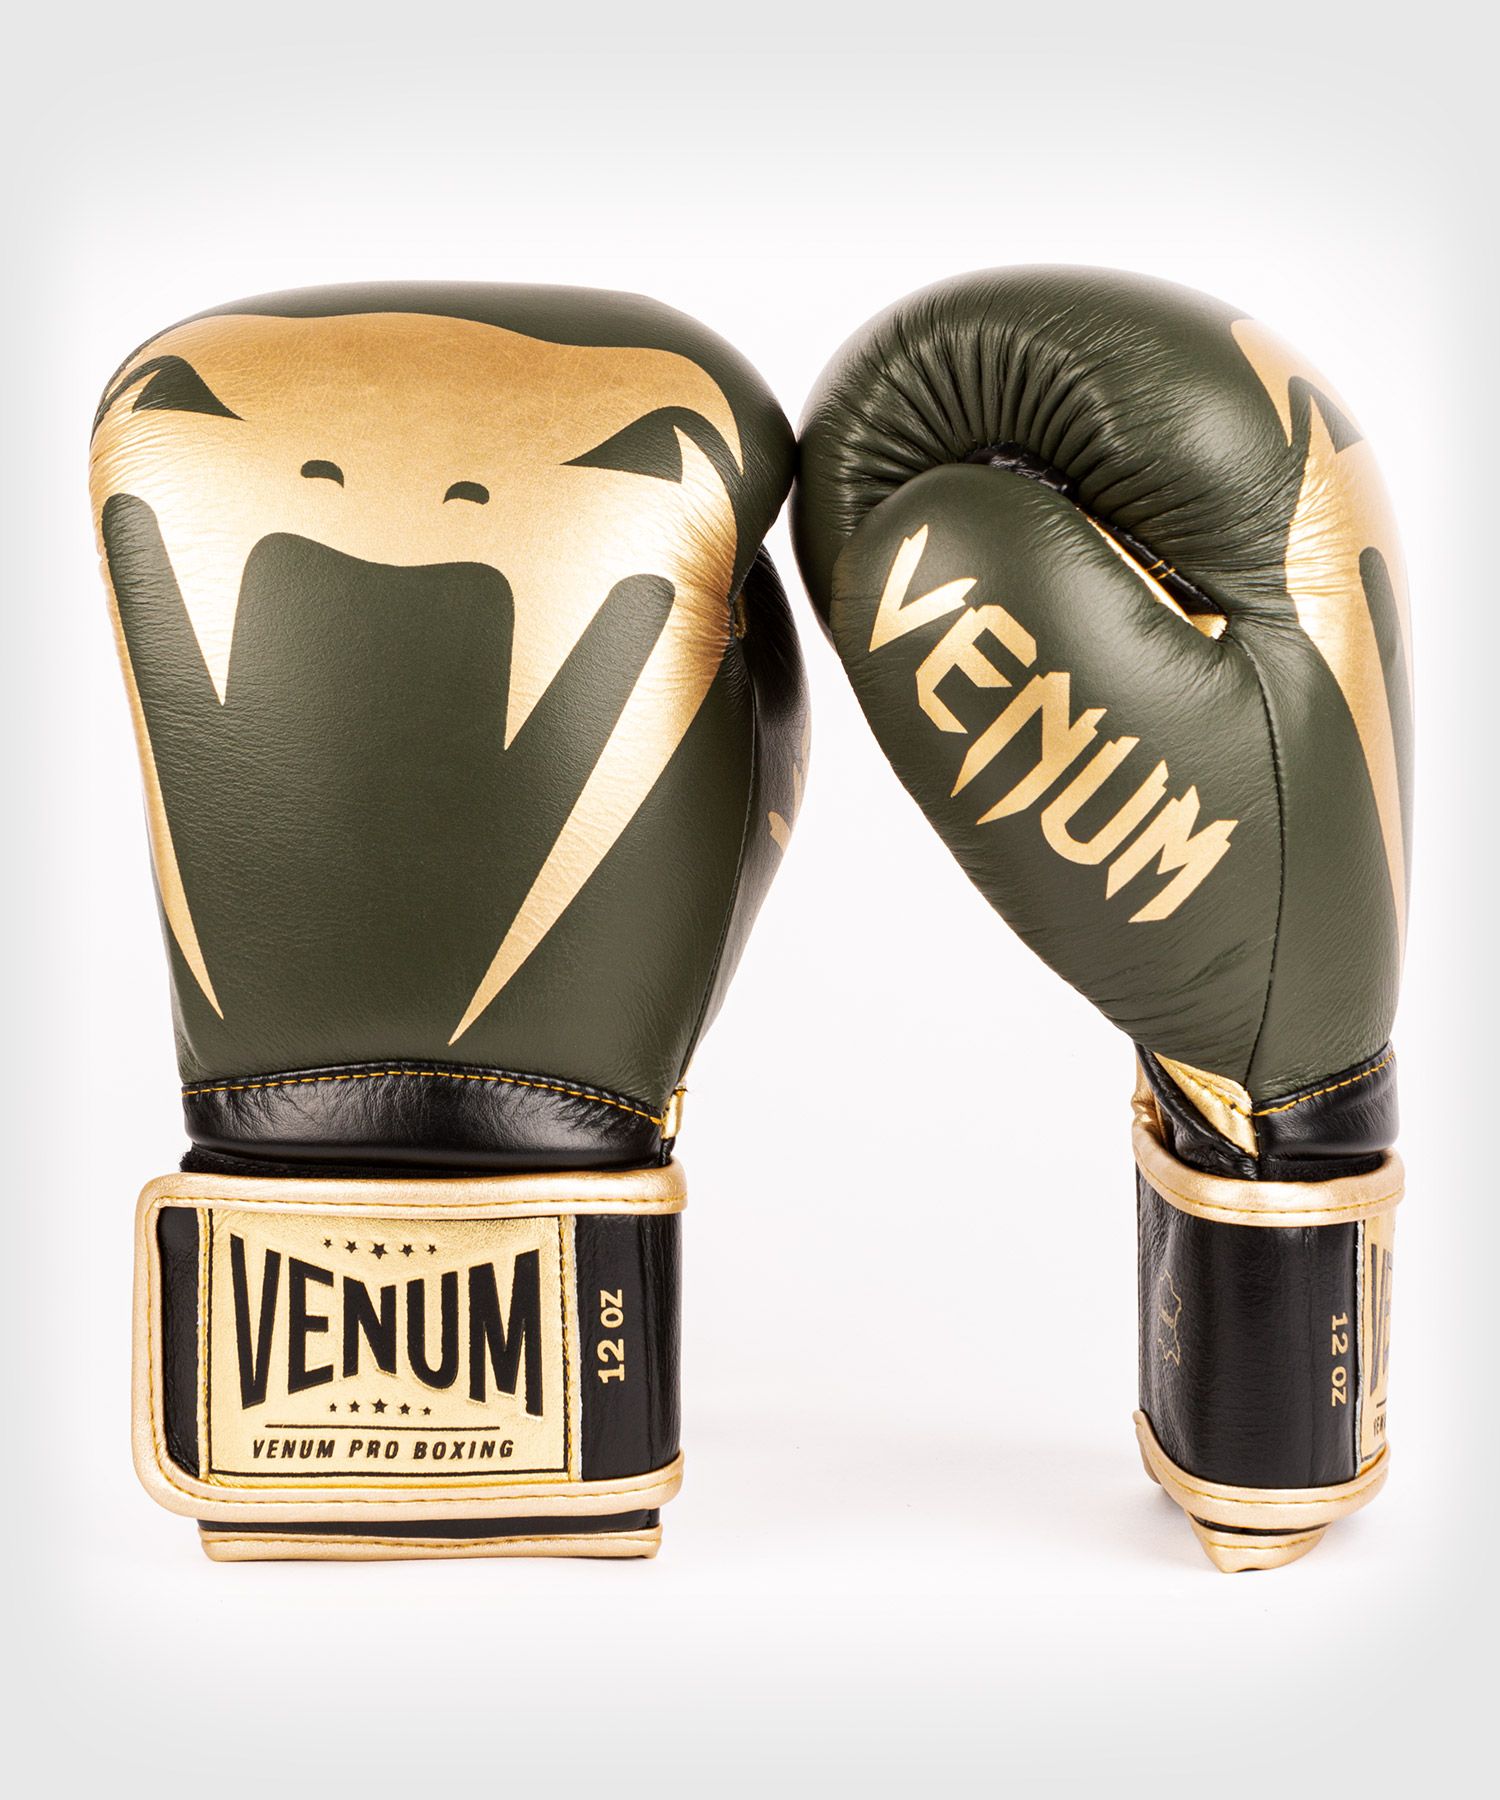 Venum Giant 2.0 professionelle Boxhandschuhe - Klettverschluss - Khaki/Gold